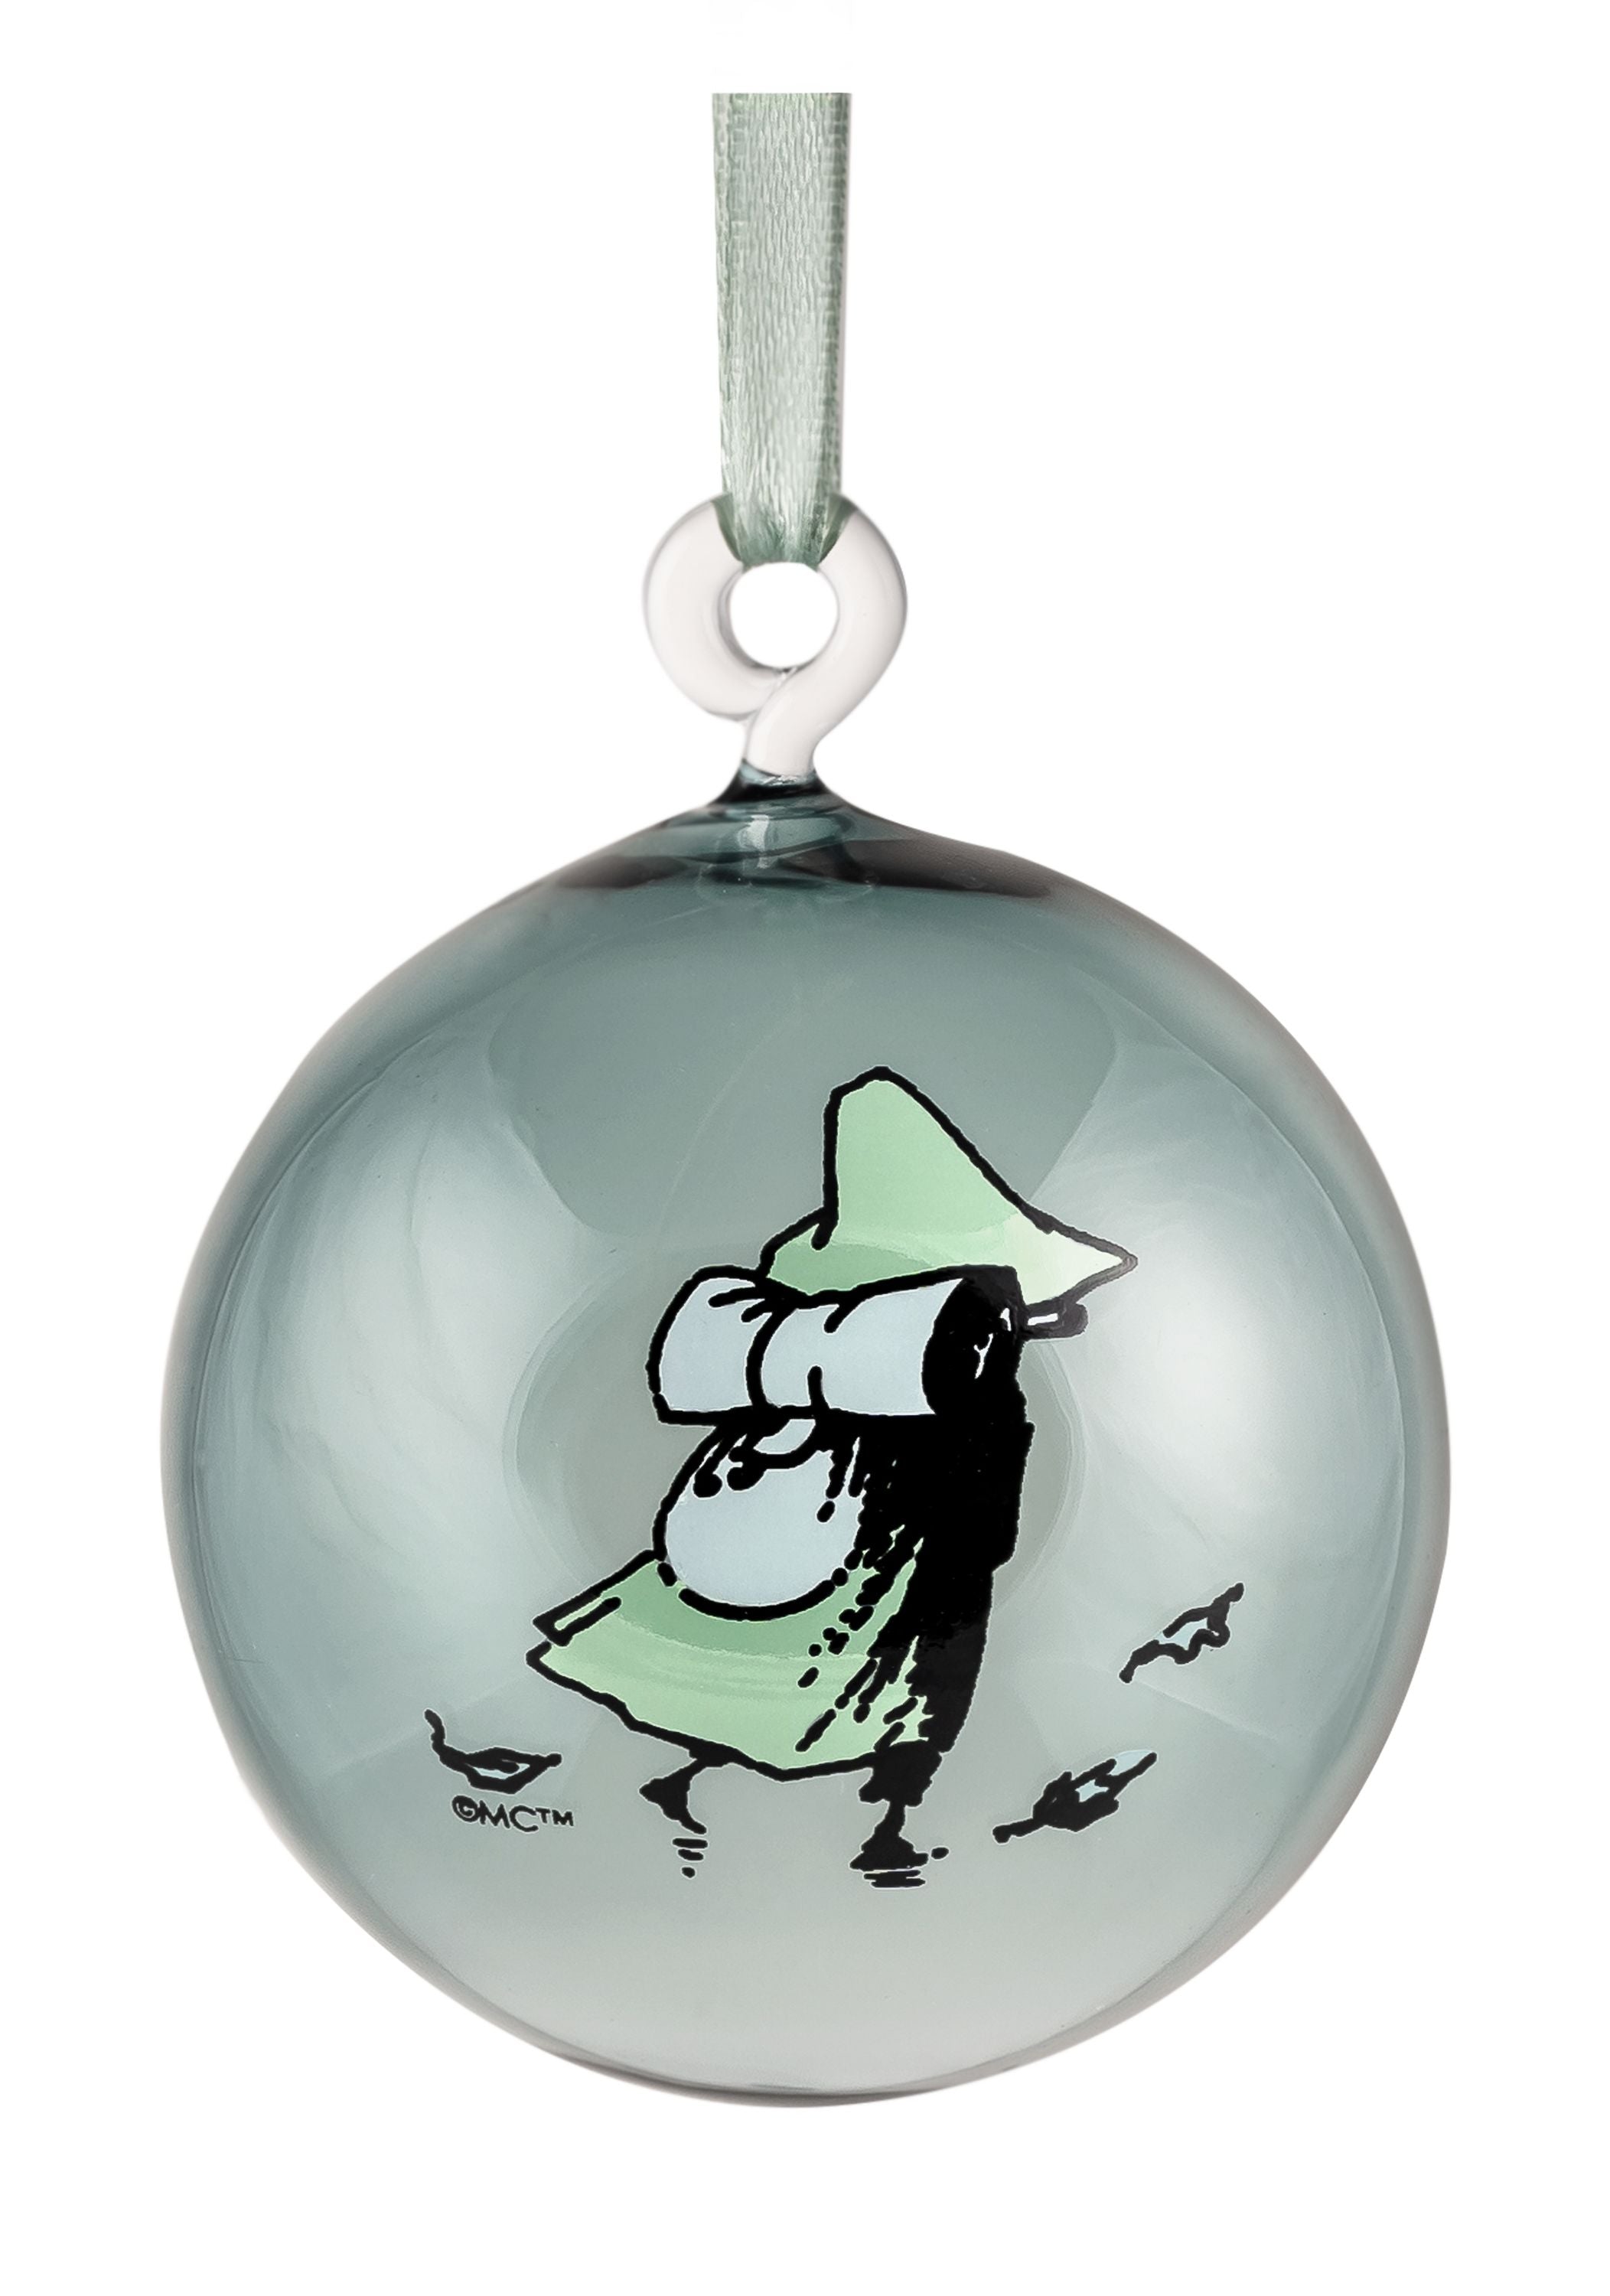 Muurla Moomin Originals Glass Decoration Ball, Gift Set Of 4 Pcs